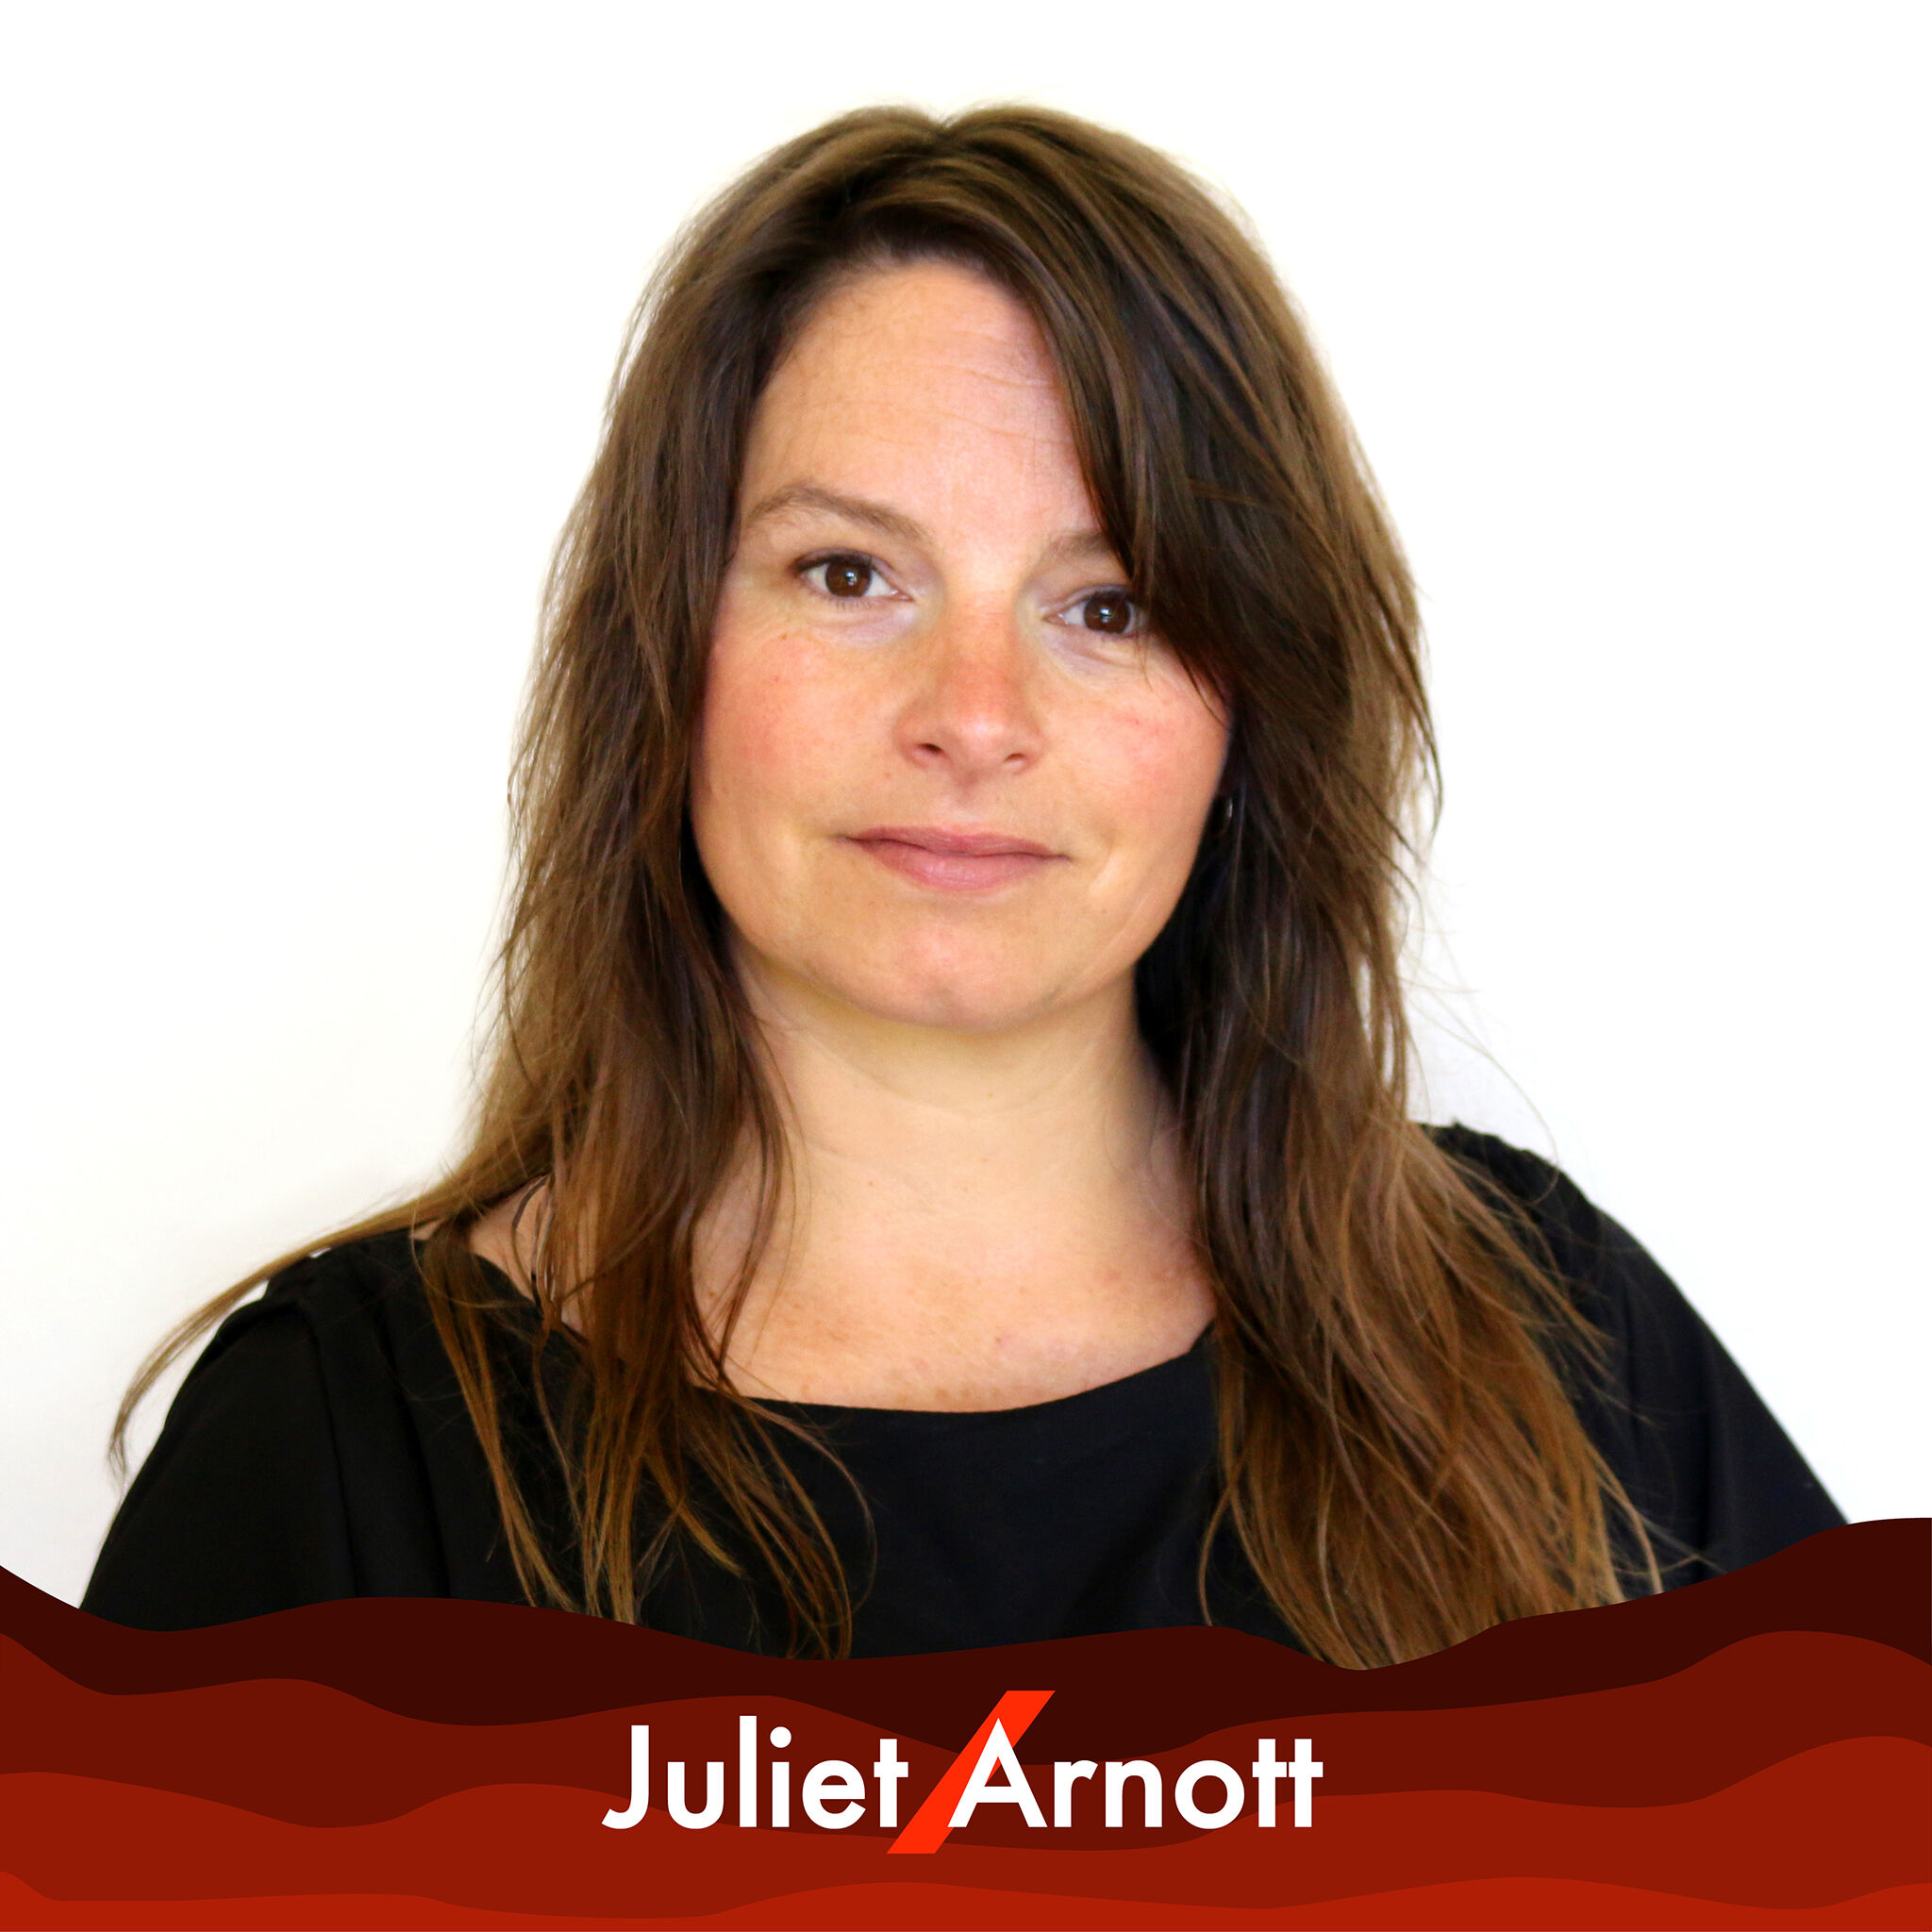 A picture of Juliet Arnott